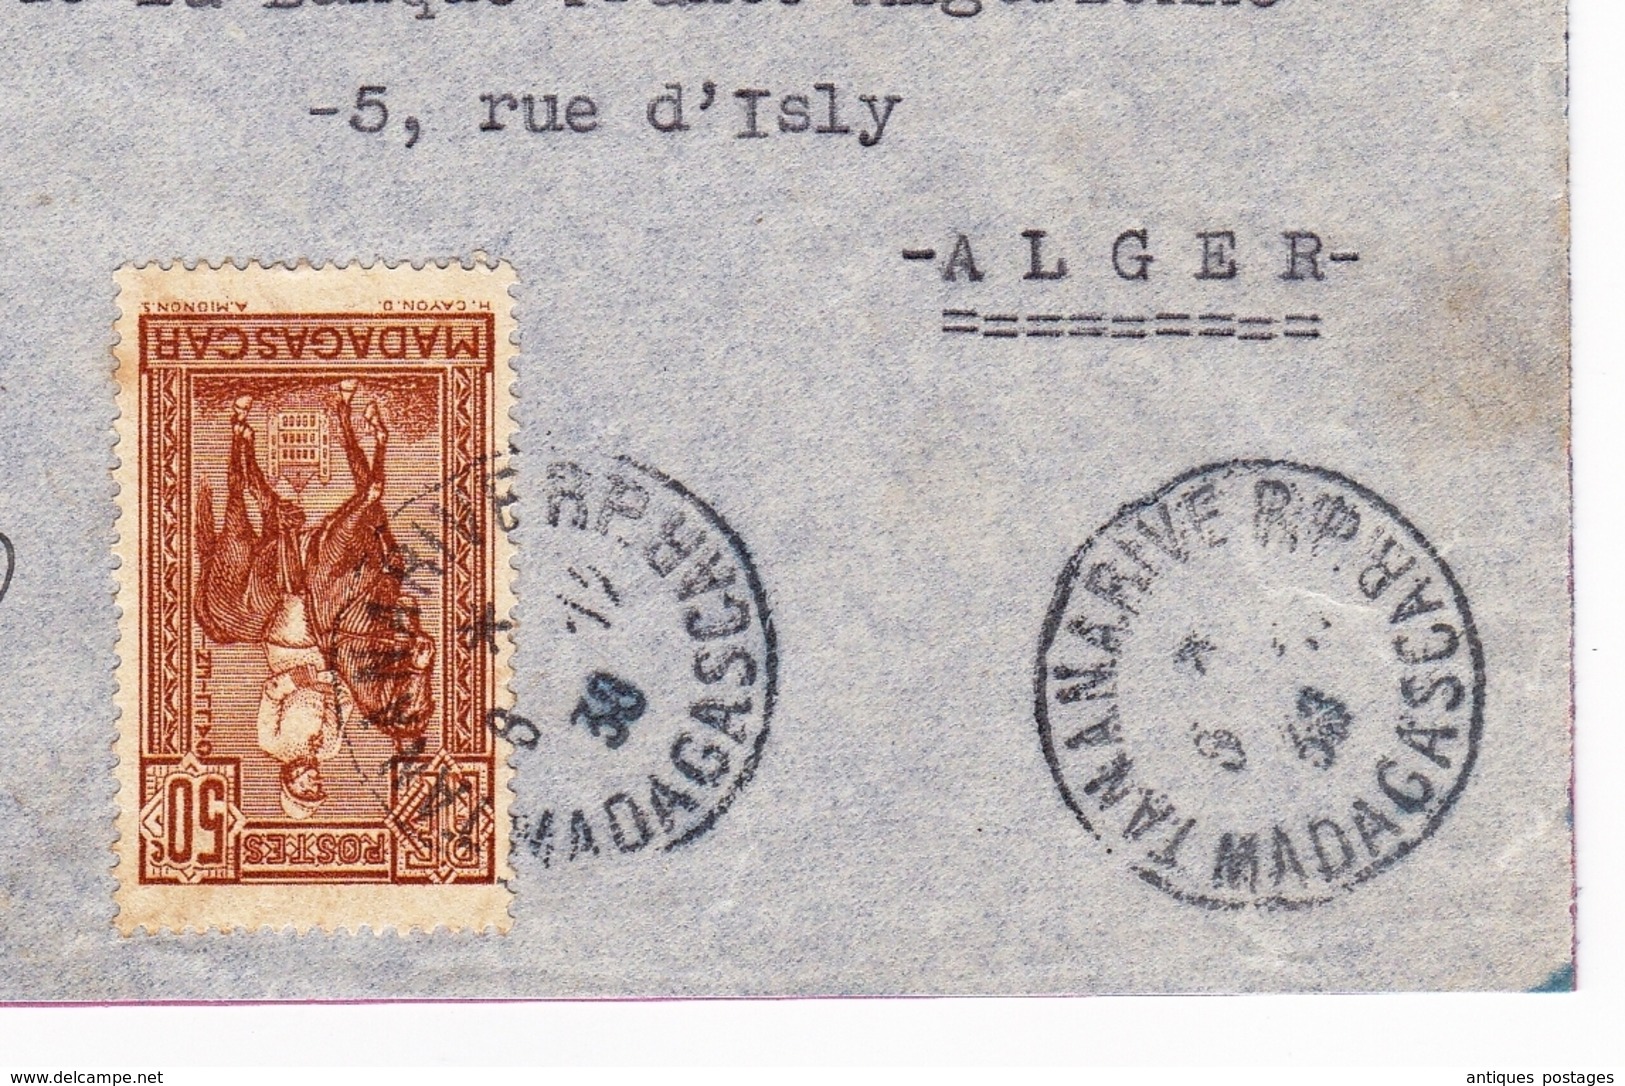 Lettre Recommandée 1938 Antananarivo Tananarive Madagascar Alger Algérie Banque Franco Algérienne - Lettres & Documents